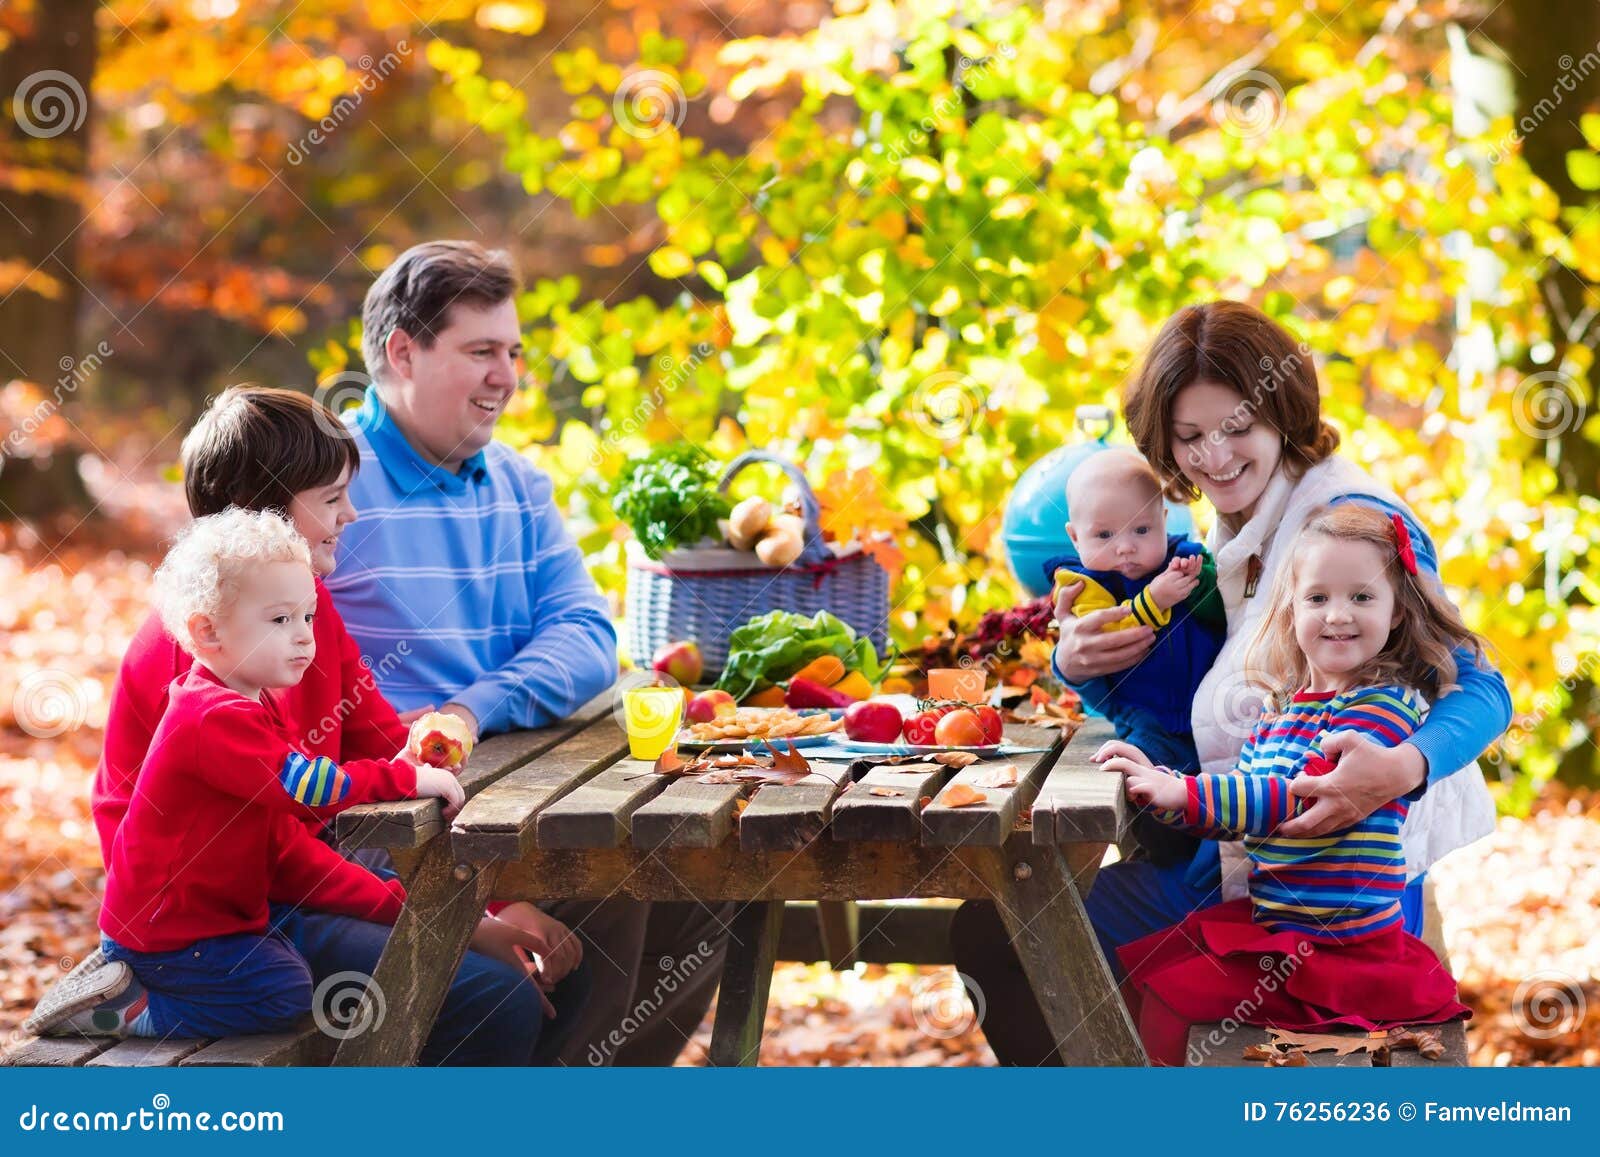 Family Having Picnic In Autumn Stock Photo - Image of ...